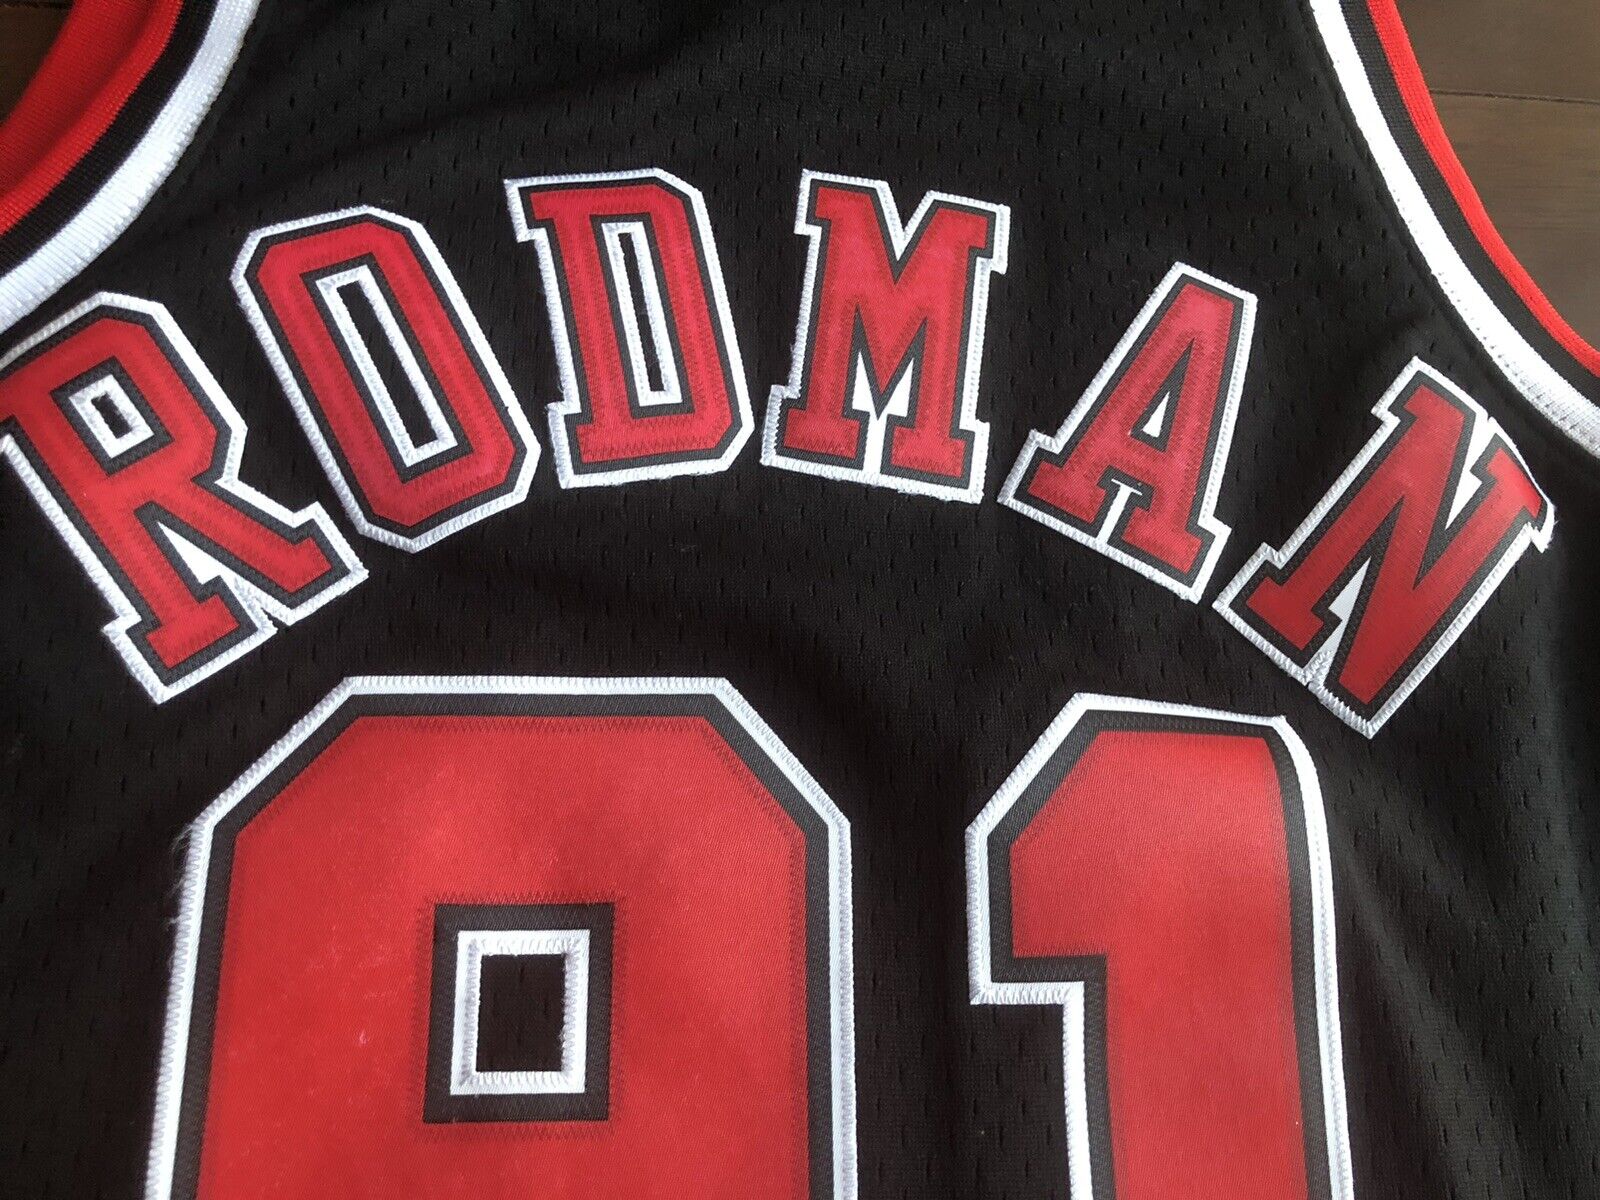 Mitchell & Ness Chicago Bulls Dennis Rodman #91 1995 - 1996